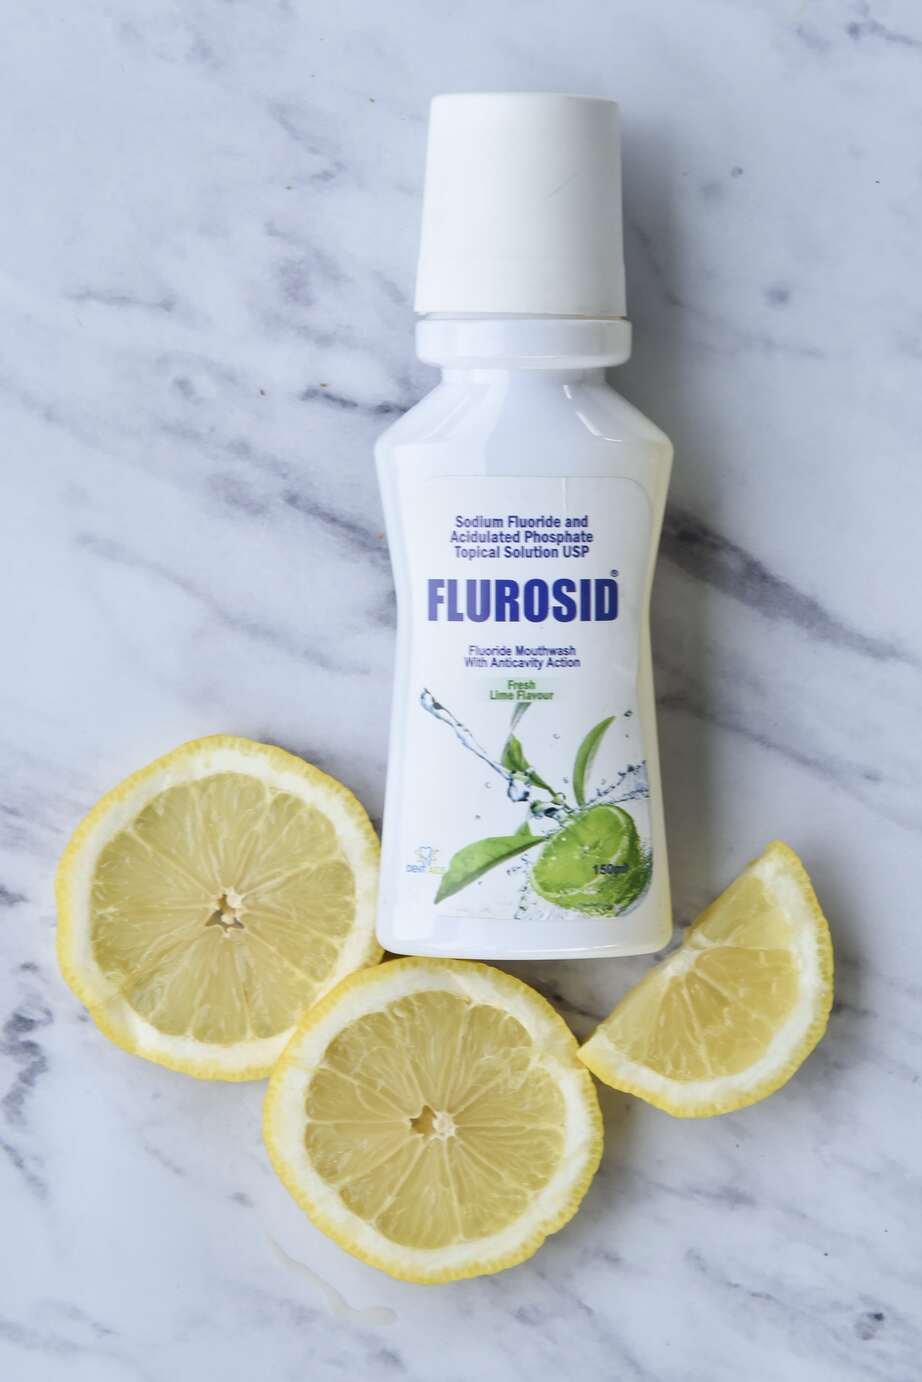 Flurosid - Fluoride Mouthwash